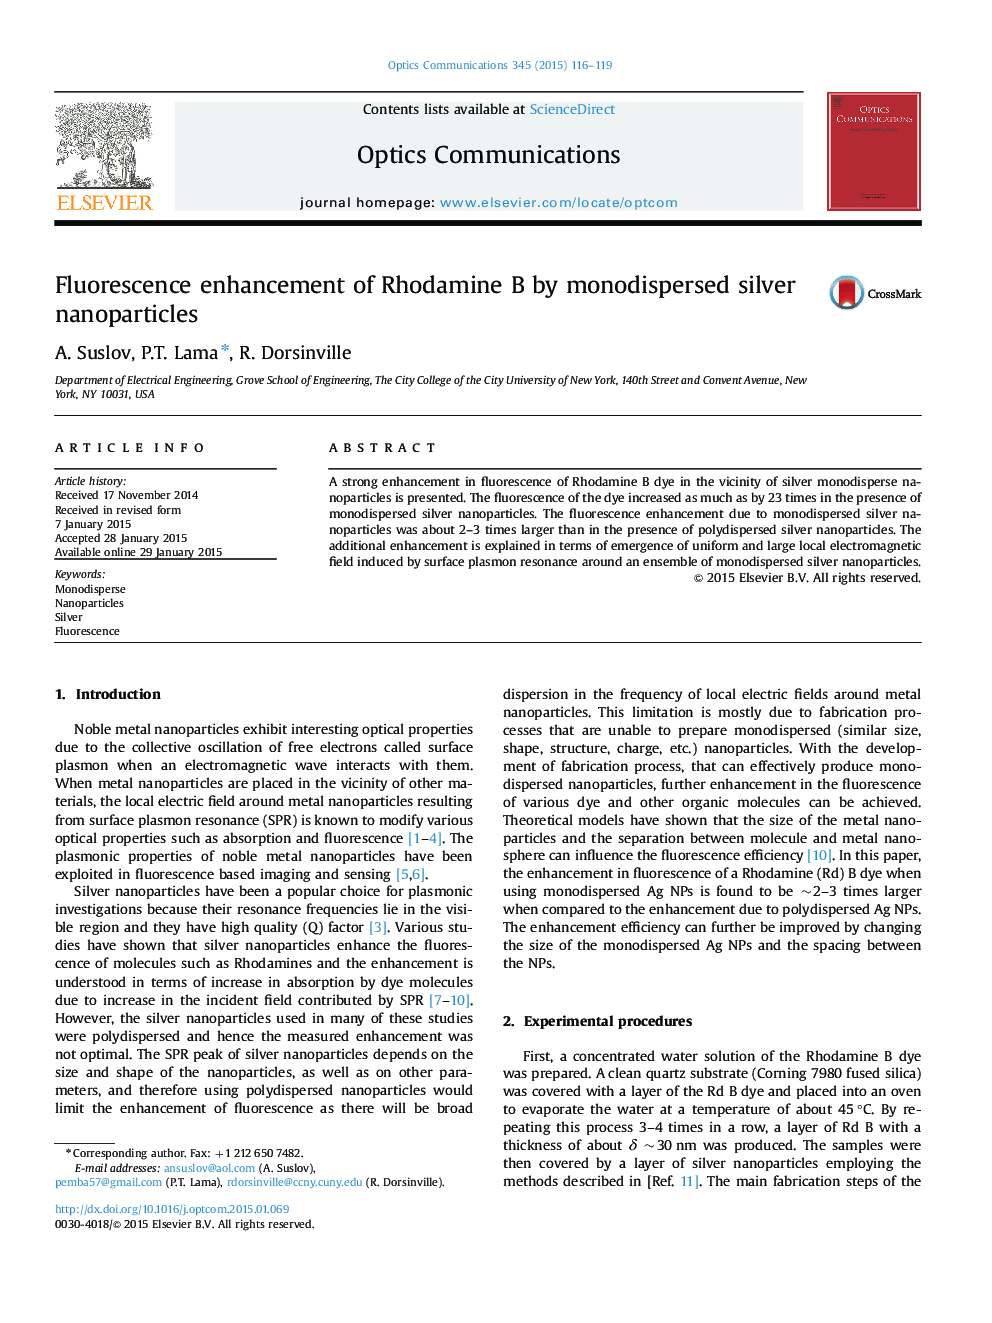 Fluorescence enhancement of Rhodamine B by monodispersed silver nanoparticles